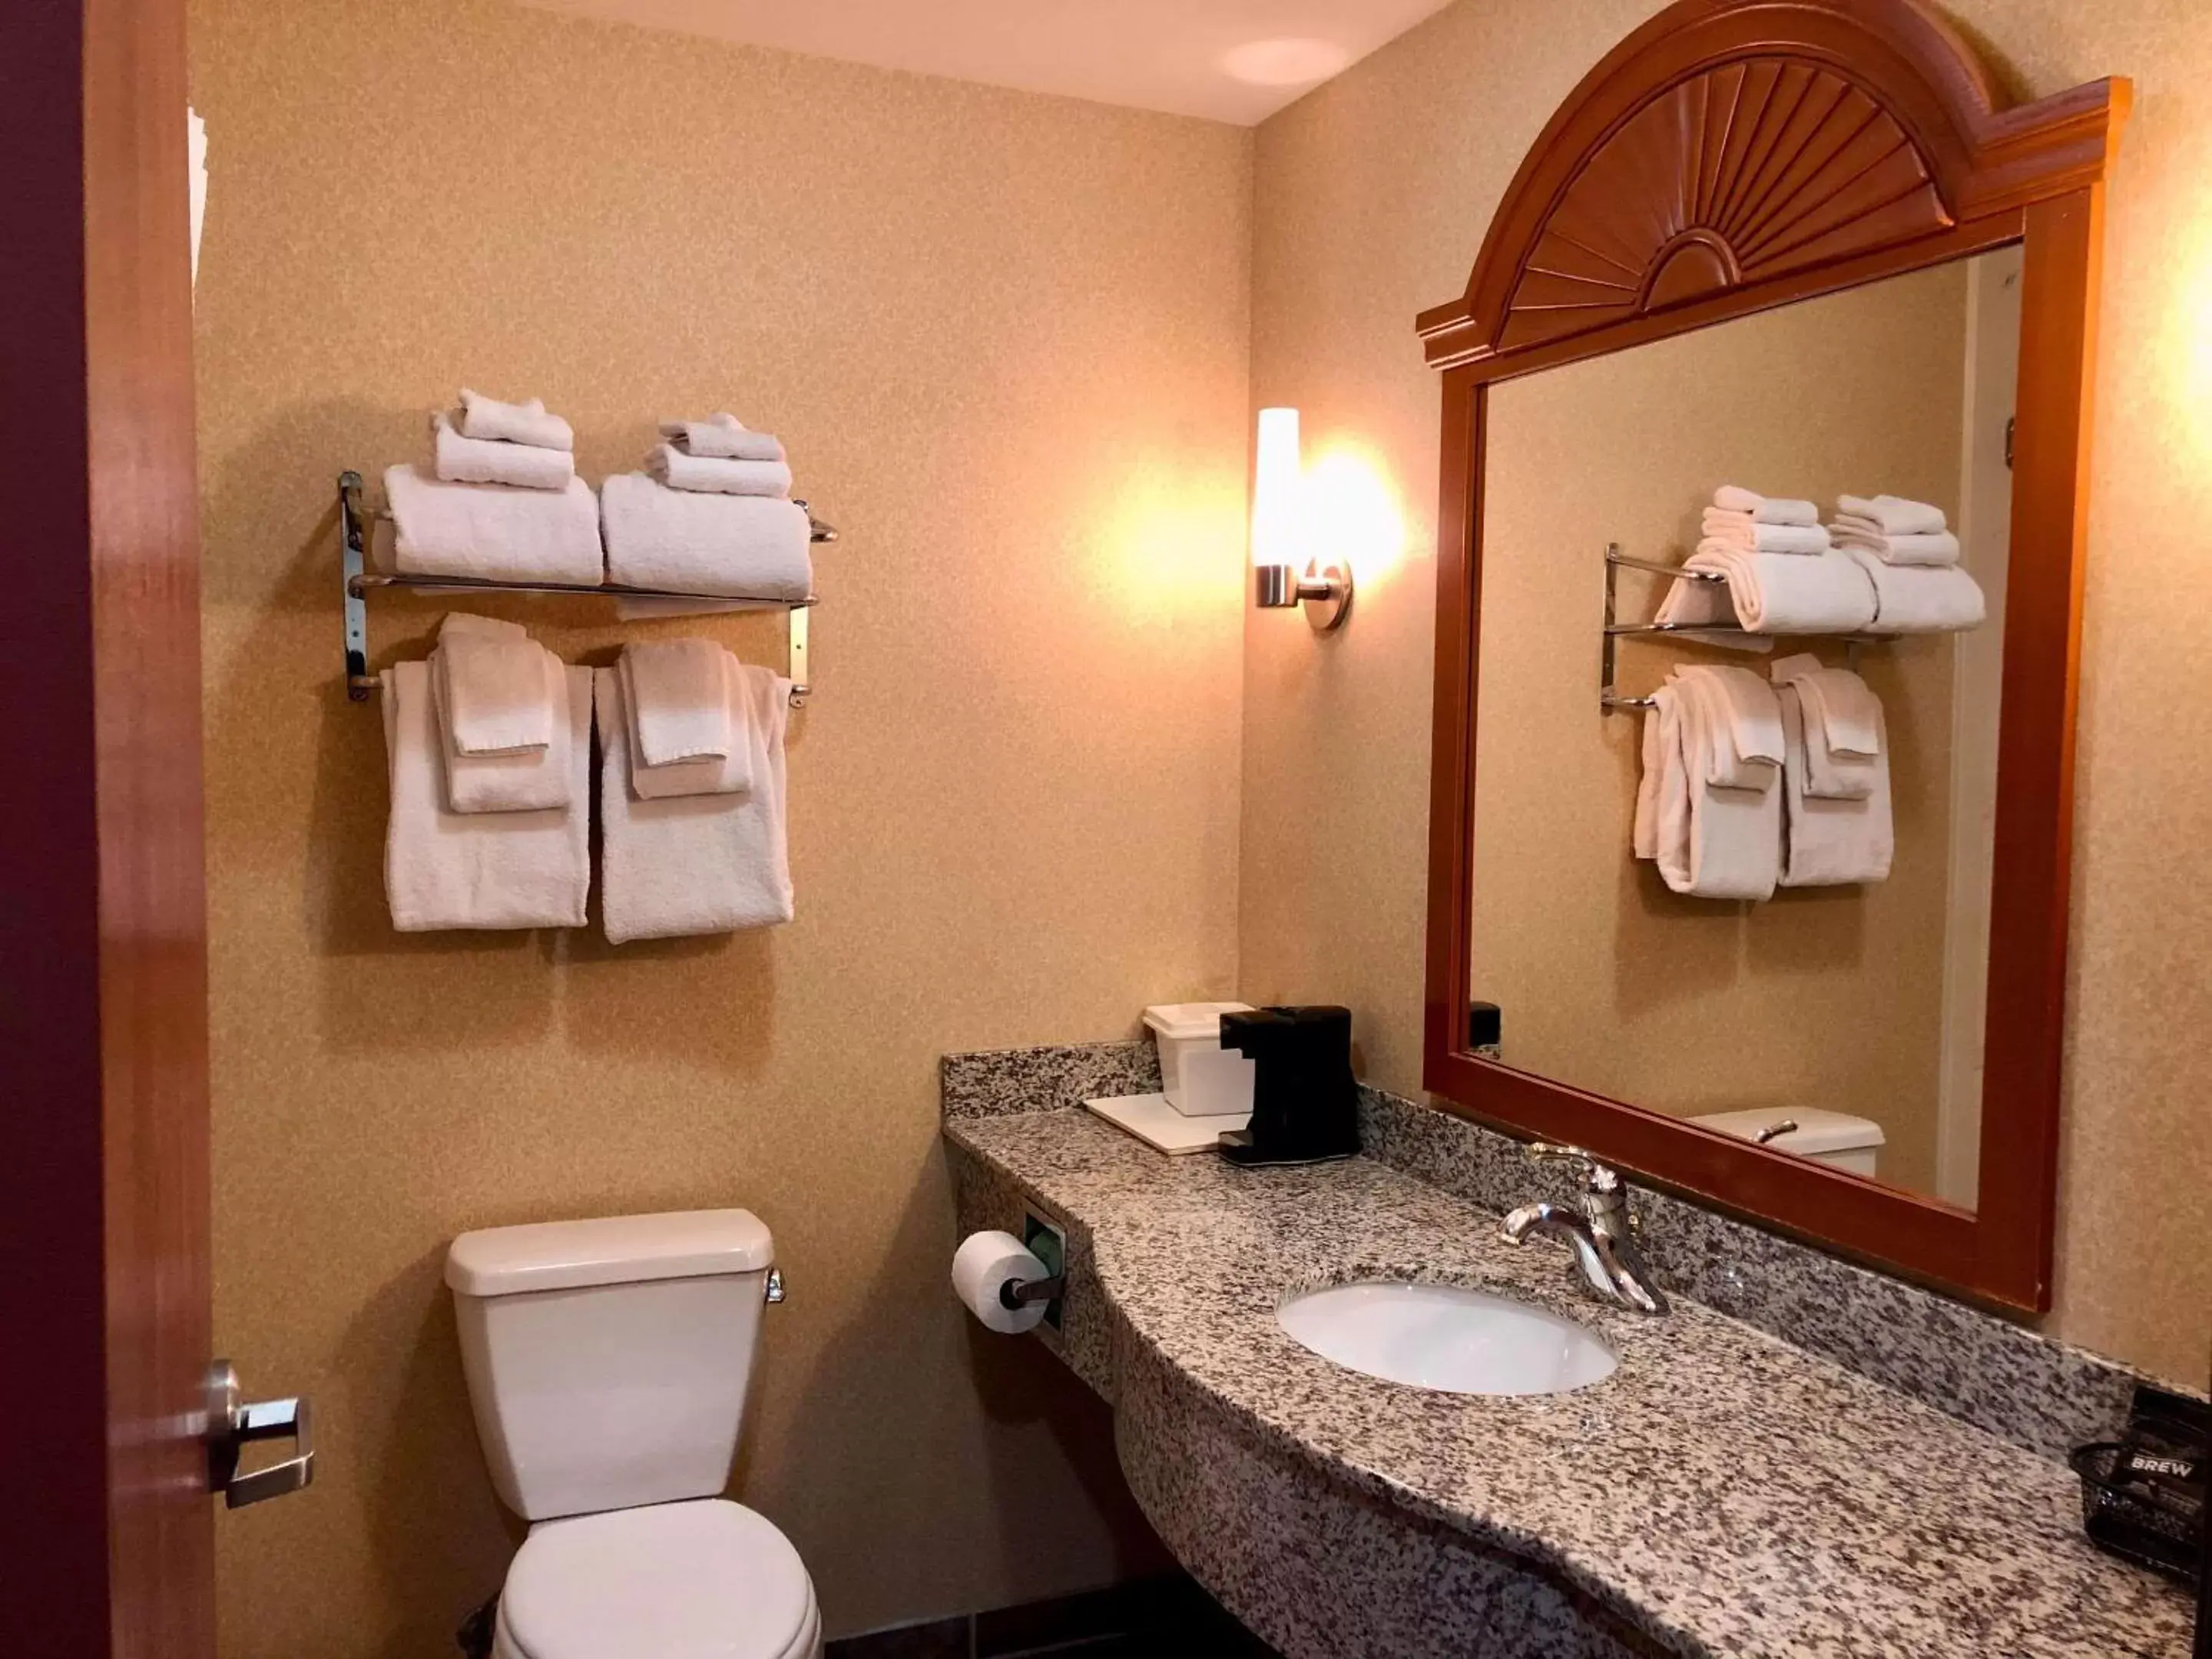 Bathroom in Comfort Inn Ogden near Event Center